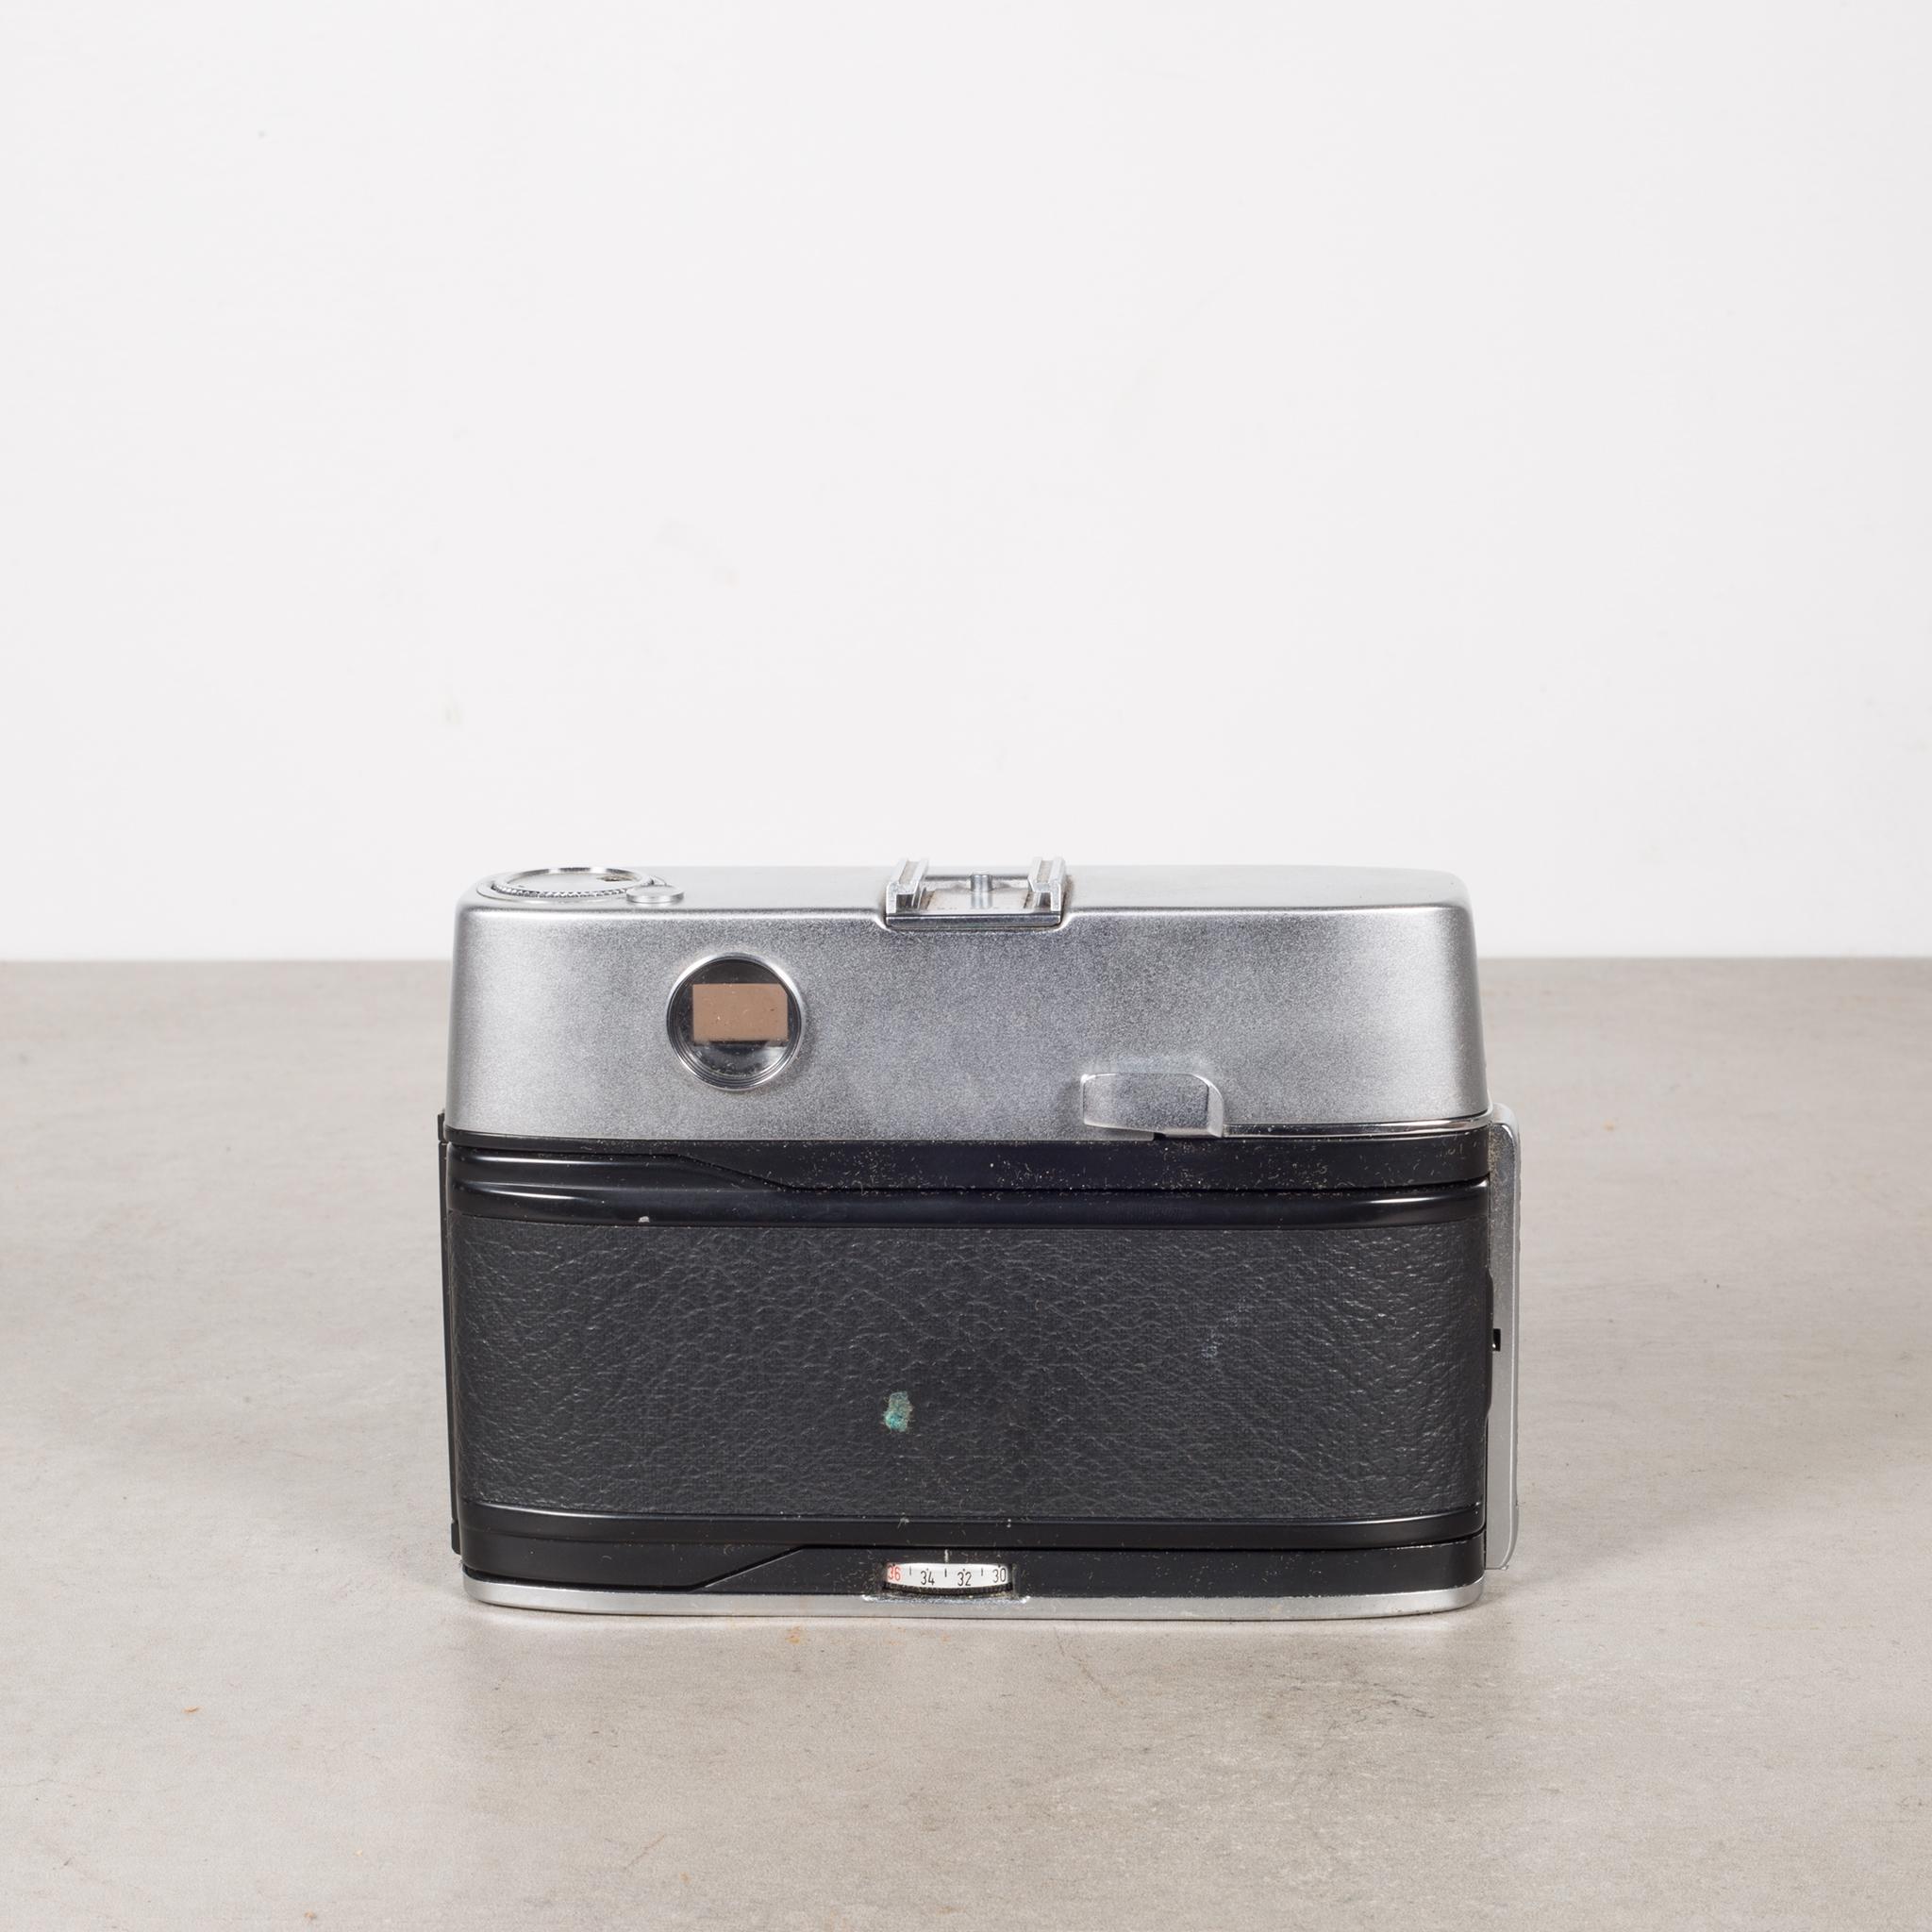 German AGFA Optima 1 Camera with Original Leather Case, circa 1960